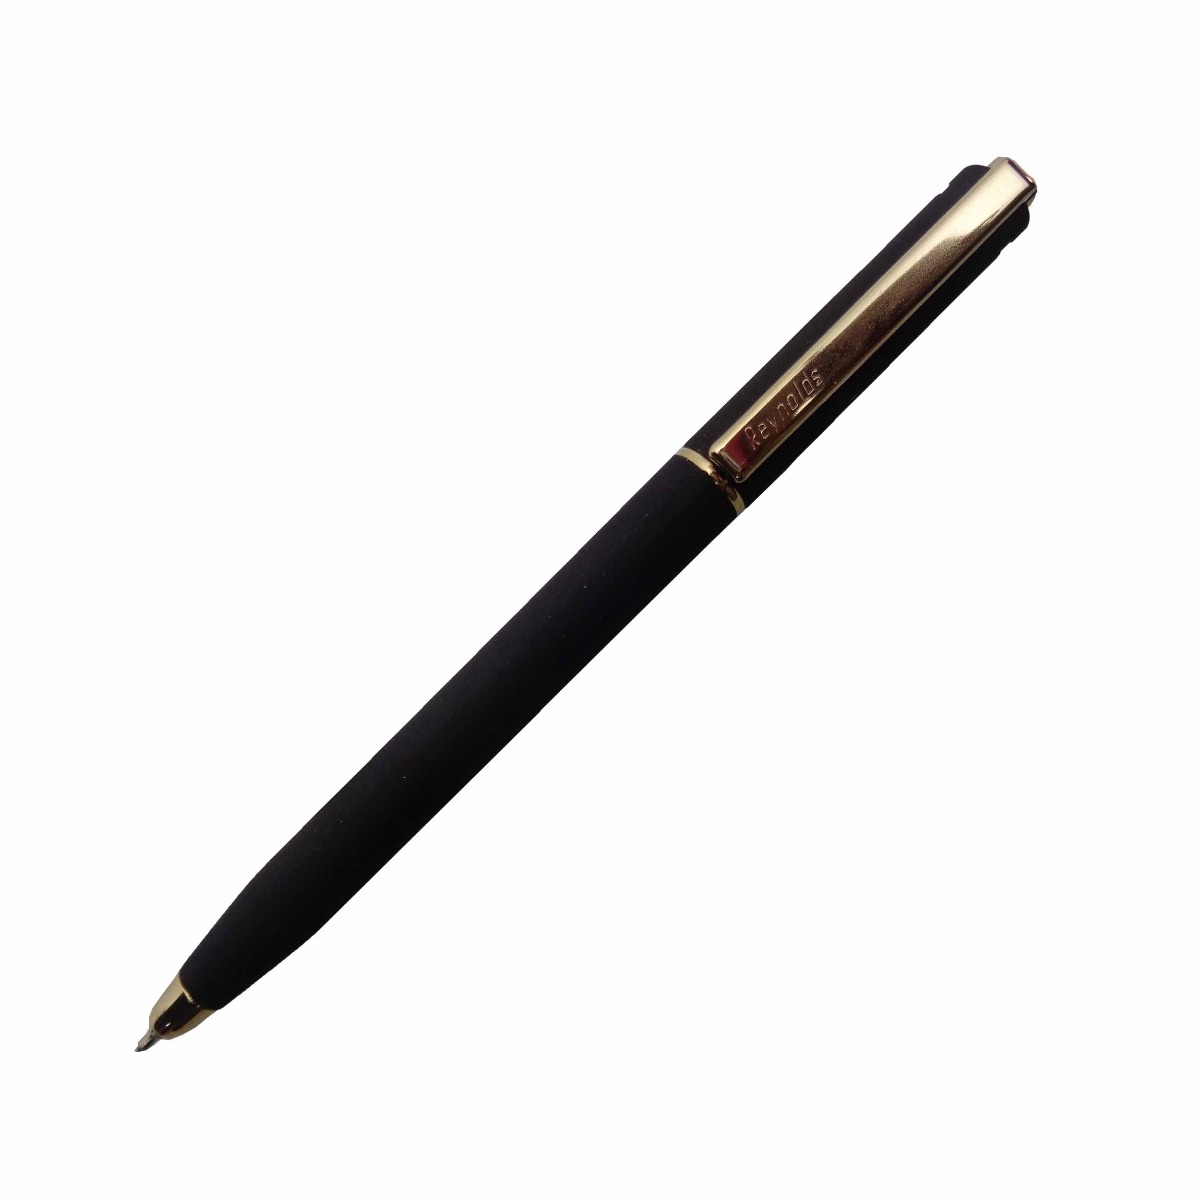 Reynolds Model 15338 Aerosoft gold Black color body with golden clip fine tip retractable ball pen